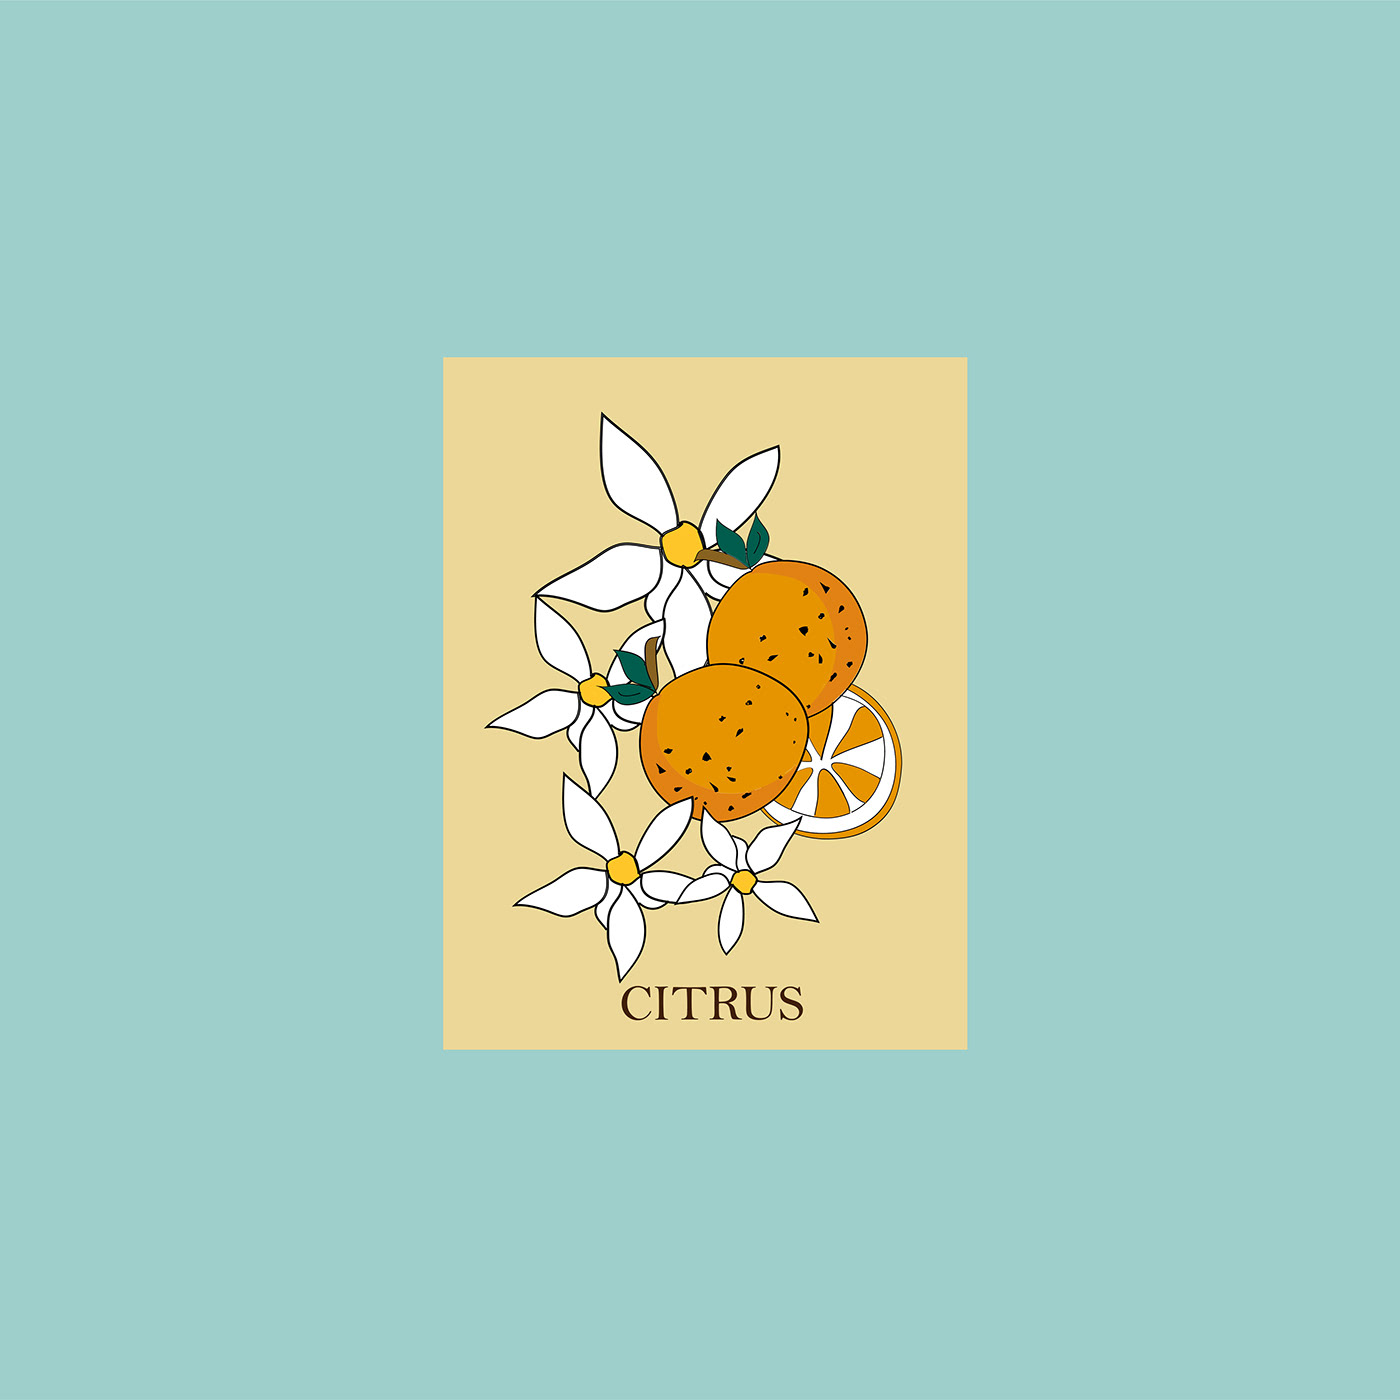 botanica citrus Flores granada illustracion Illustrator manzanilla naturaleza zinnia lenguajedelasflores